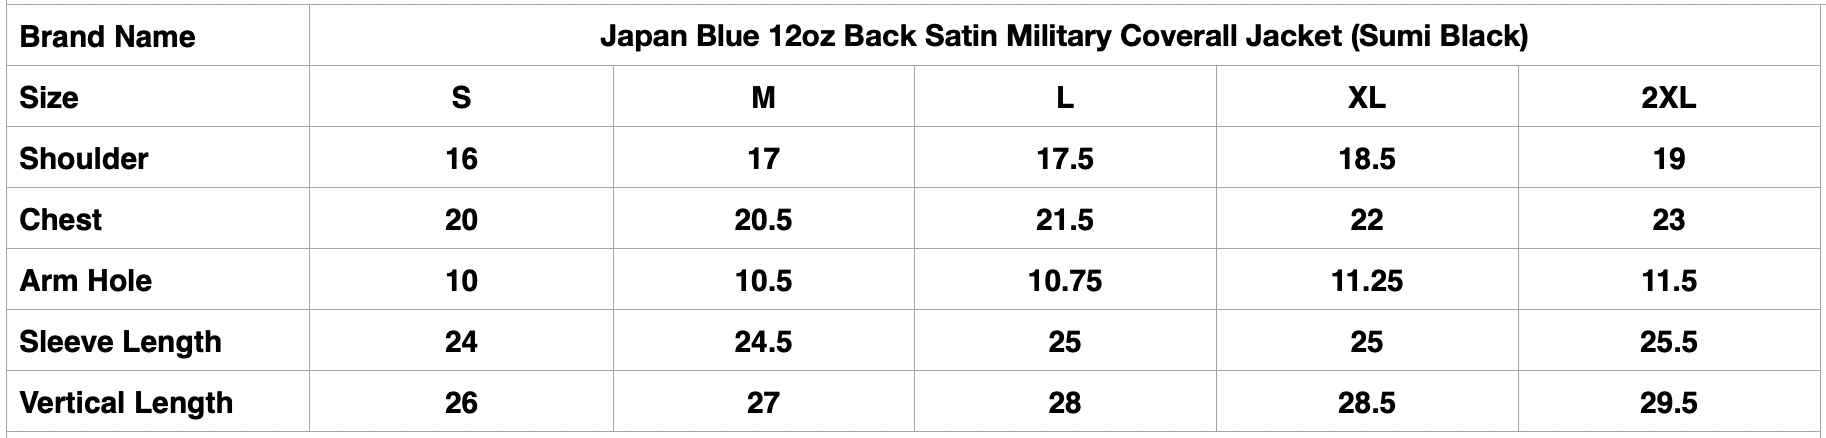 Japan Blue 12oz Back Satin Military Coverall Jacket (Sumi Black)